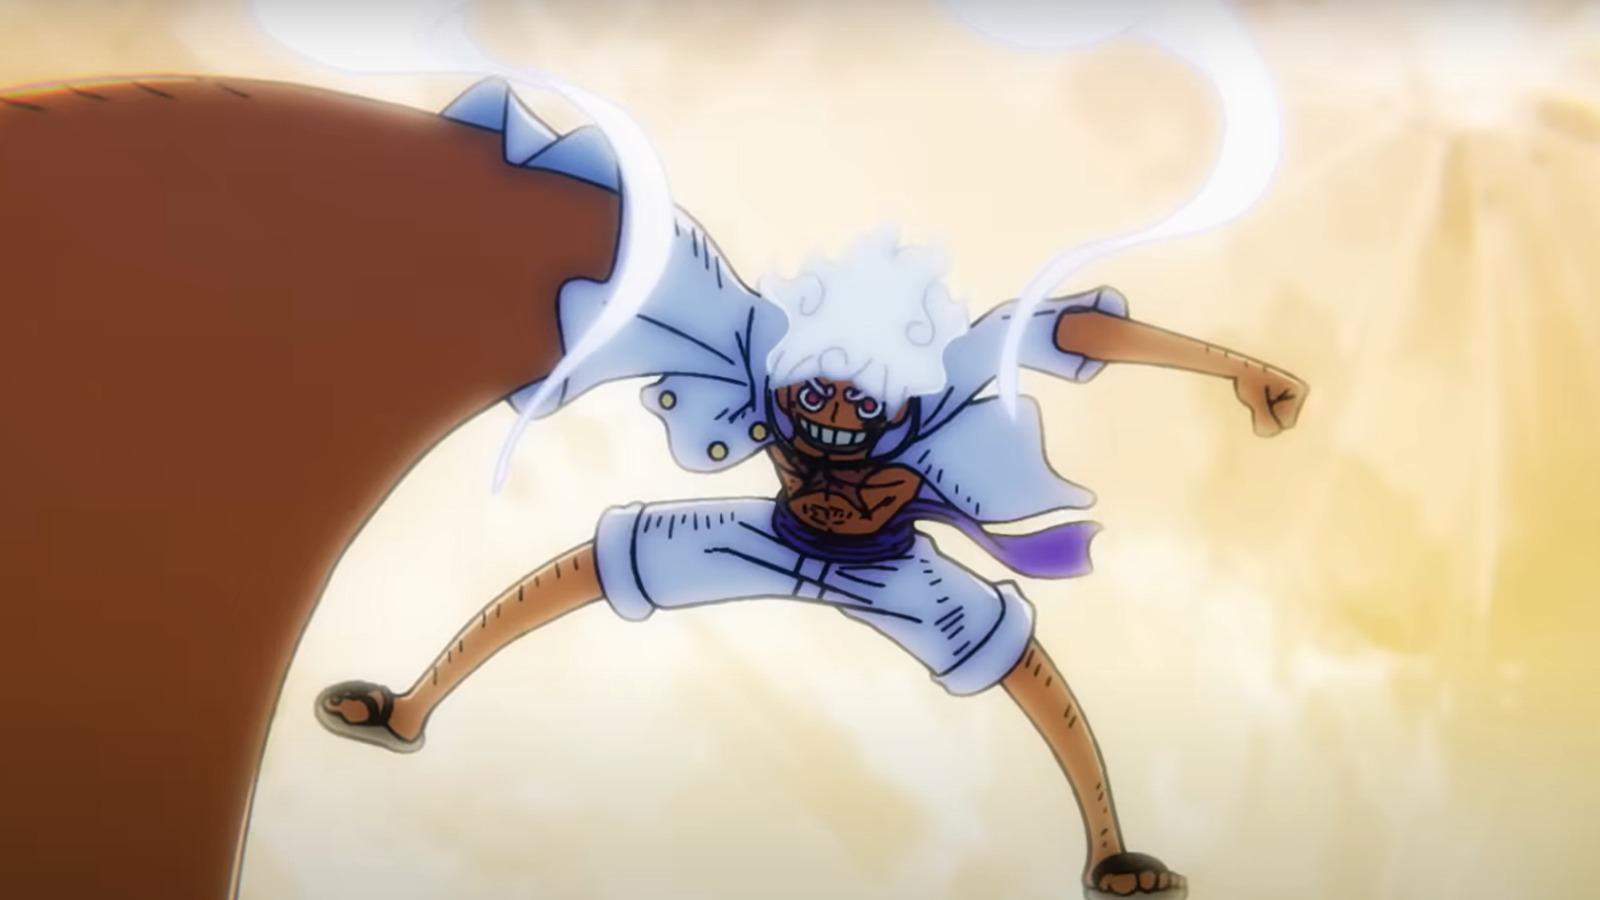 New One Piece Titles Tease Nami's Near-Death Battle